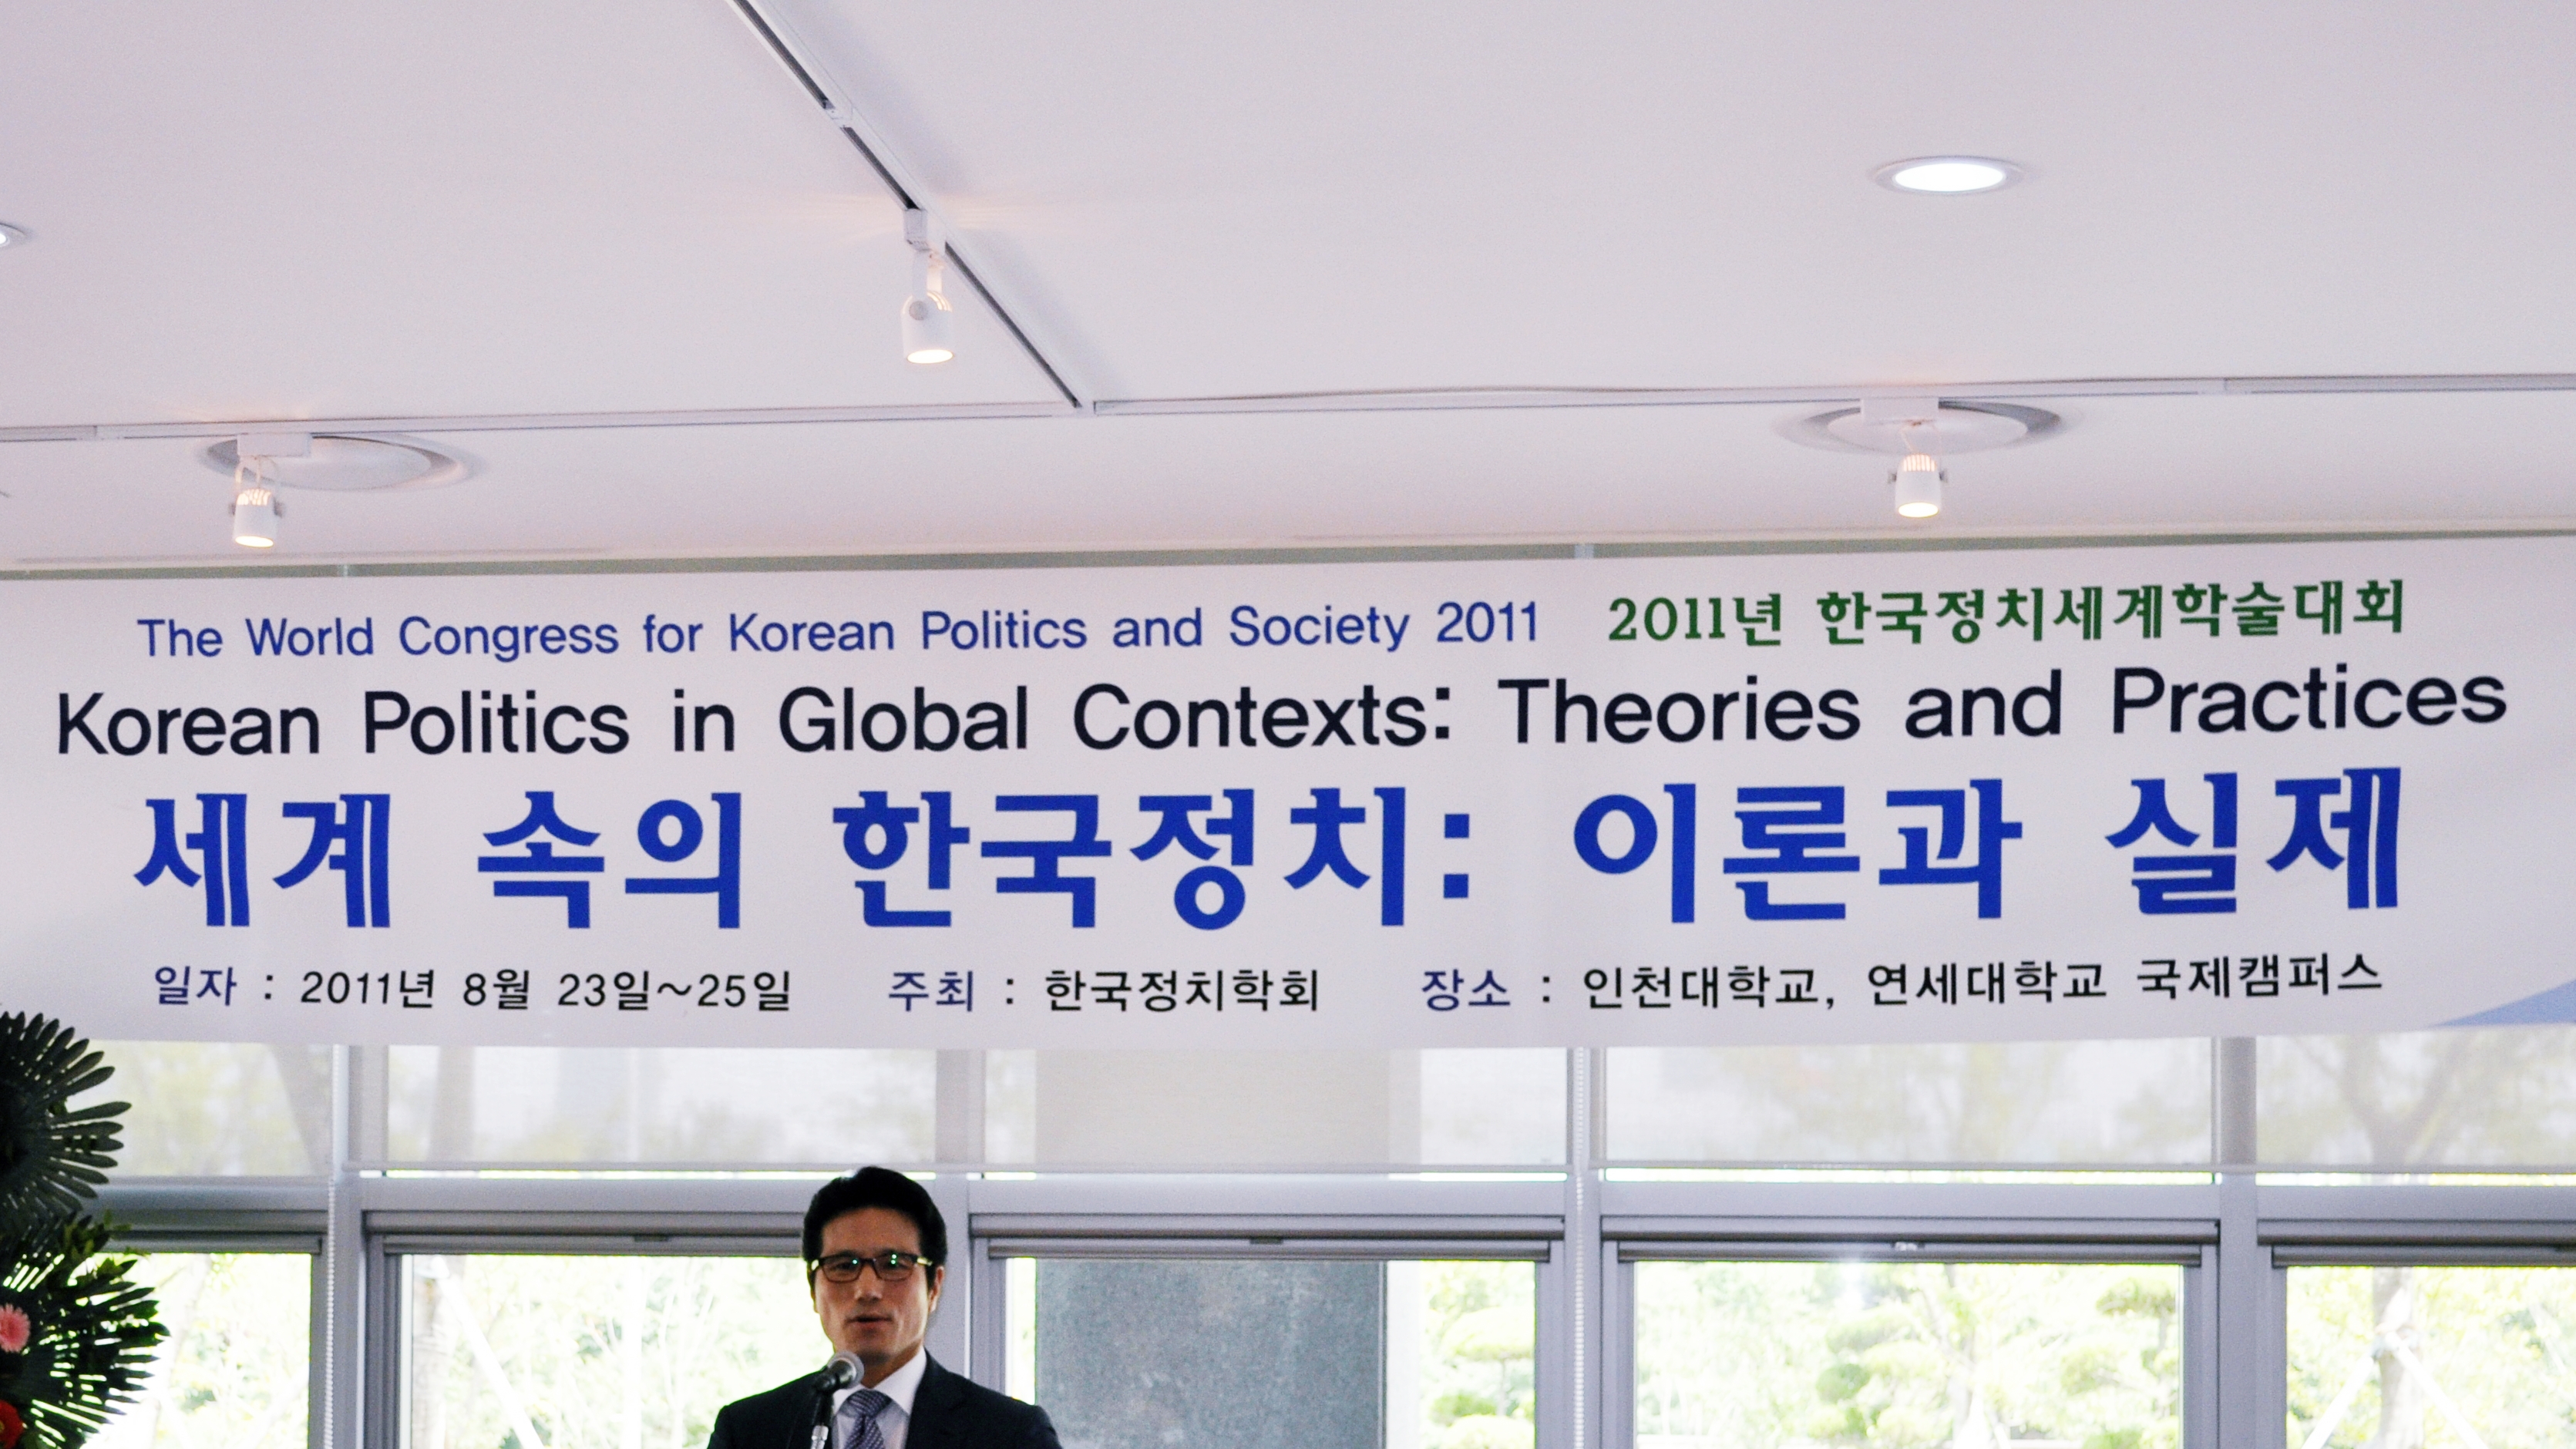 Korean Politics in Global Contexts:Theories and Practices 세계속의 한국정치:이론과 실제 -일자:2011년8월23일25일 -주최:한국정치학회 -장소:인천대학교,연세대학교 국제캠퍼스